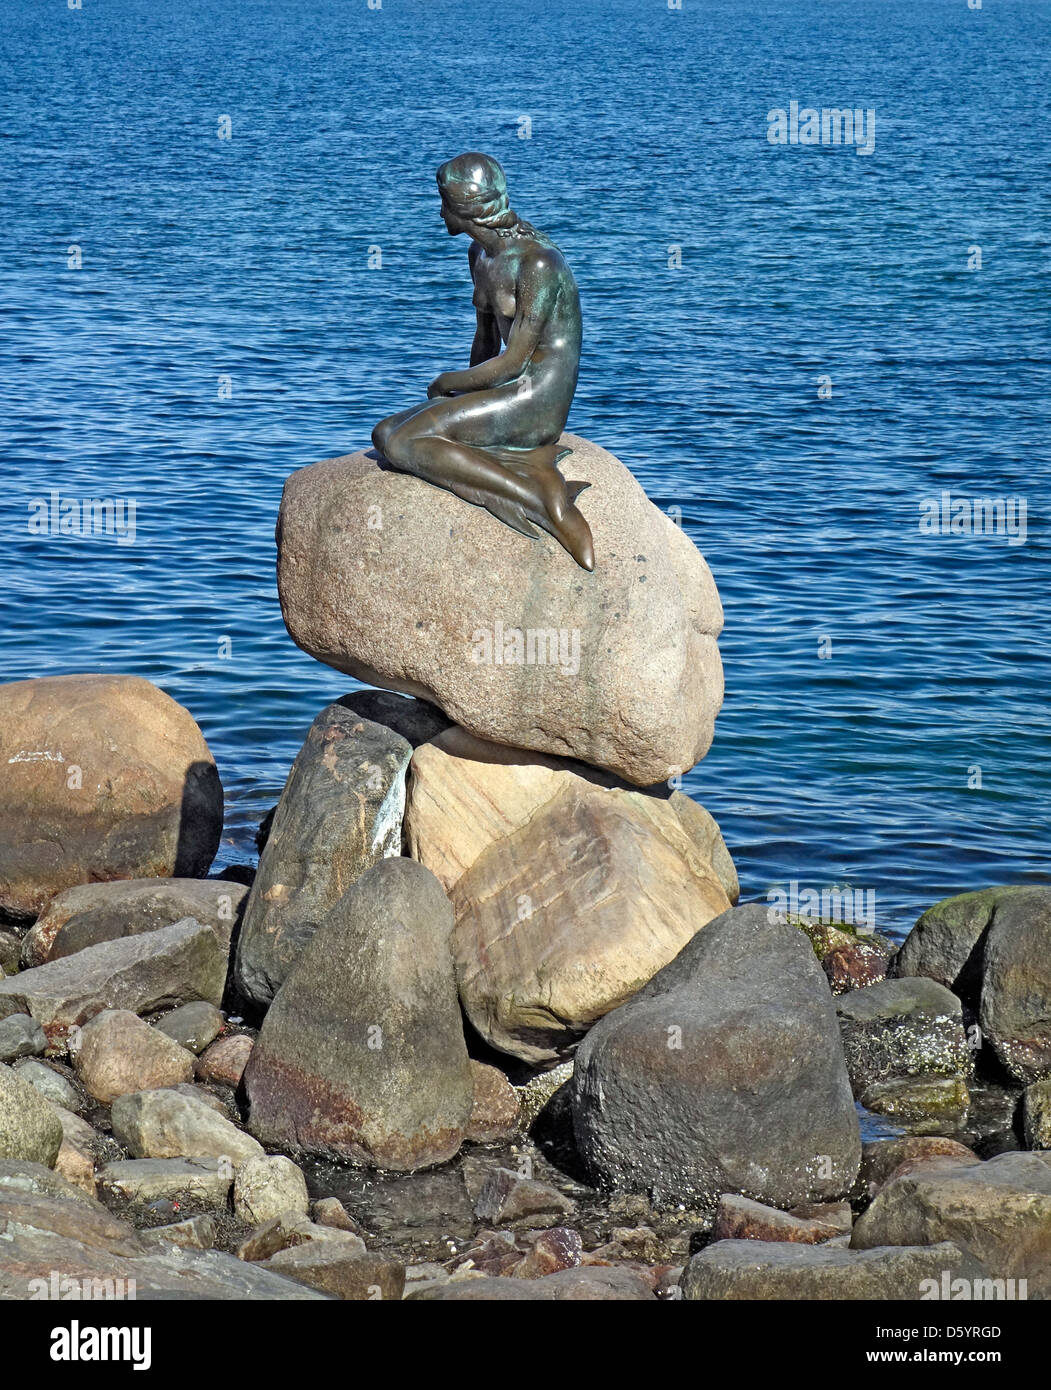 Den Lille Havfrue (The Little Mermaid) at Langelinie in Copenhagen ...